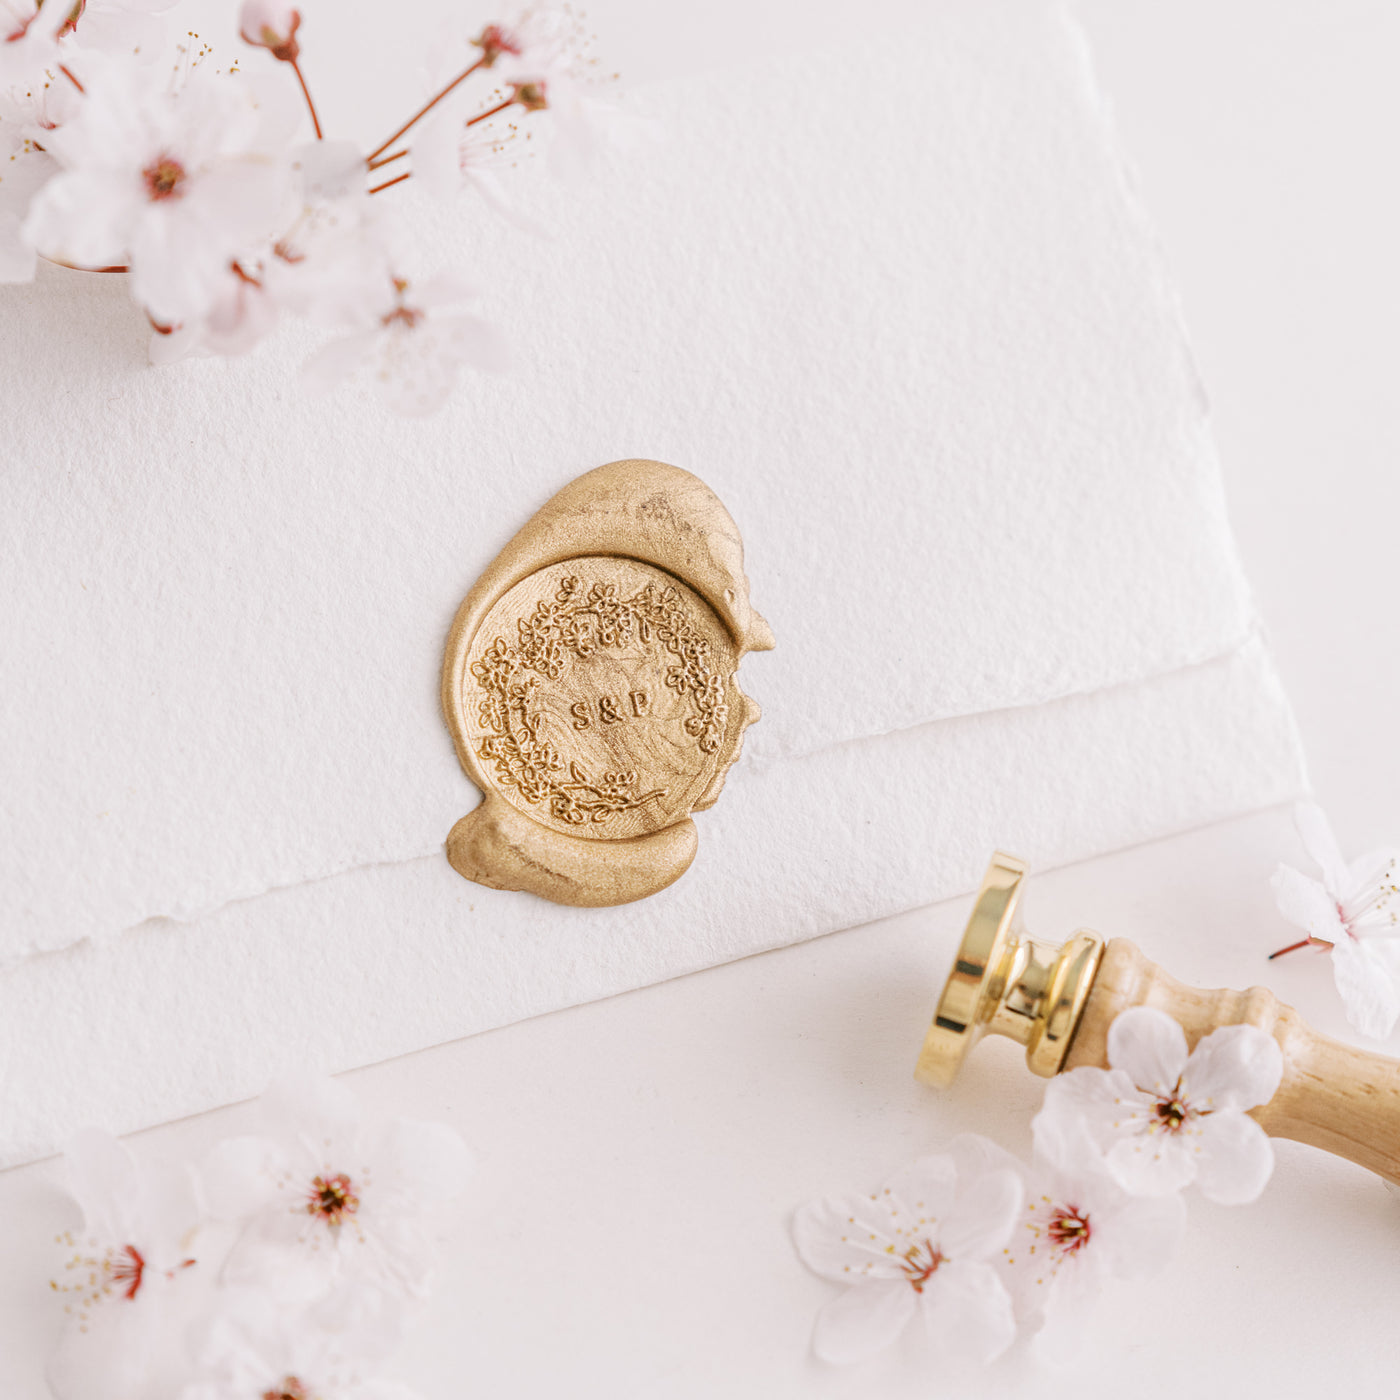 Ichika Cherry Blossom Monogram Design | Self-Adhesive Wax Seals Embosser & Rubber Stamp | 'Sakura' Cherry Blossom Embellishments for Blush Pink Spring Wedding | Heirloom Seals